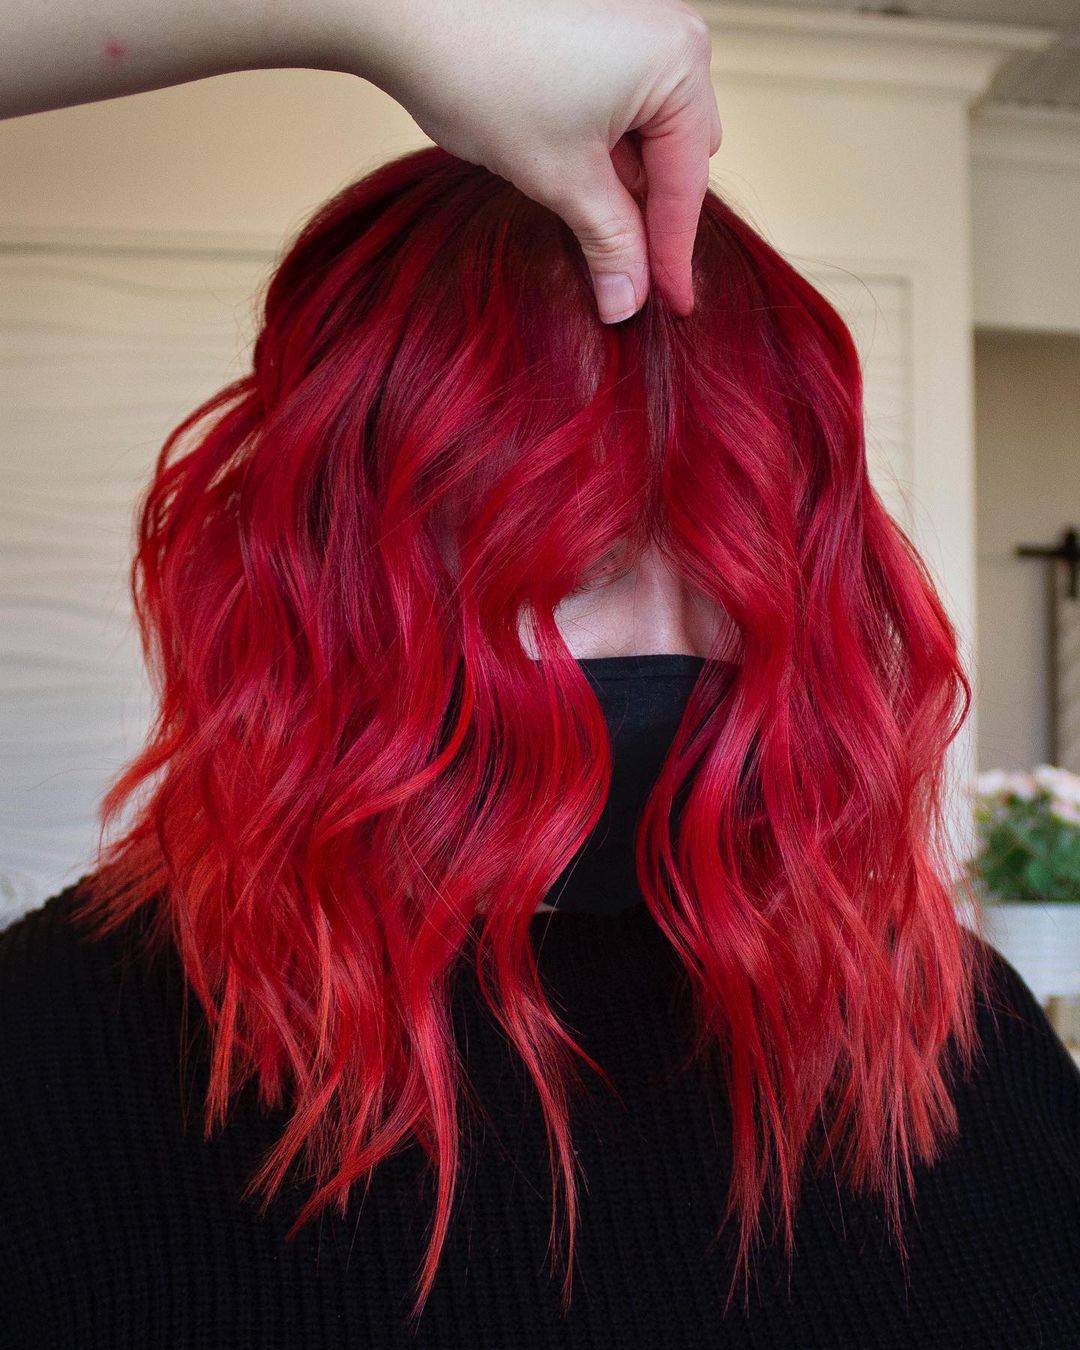 pelo rojo cereza caliente